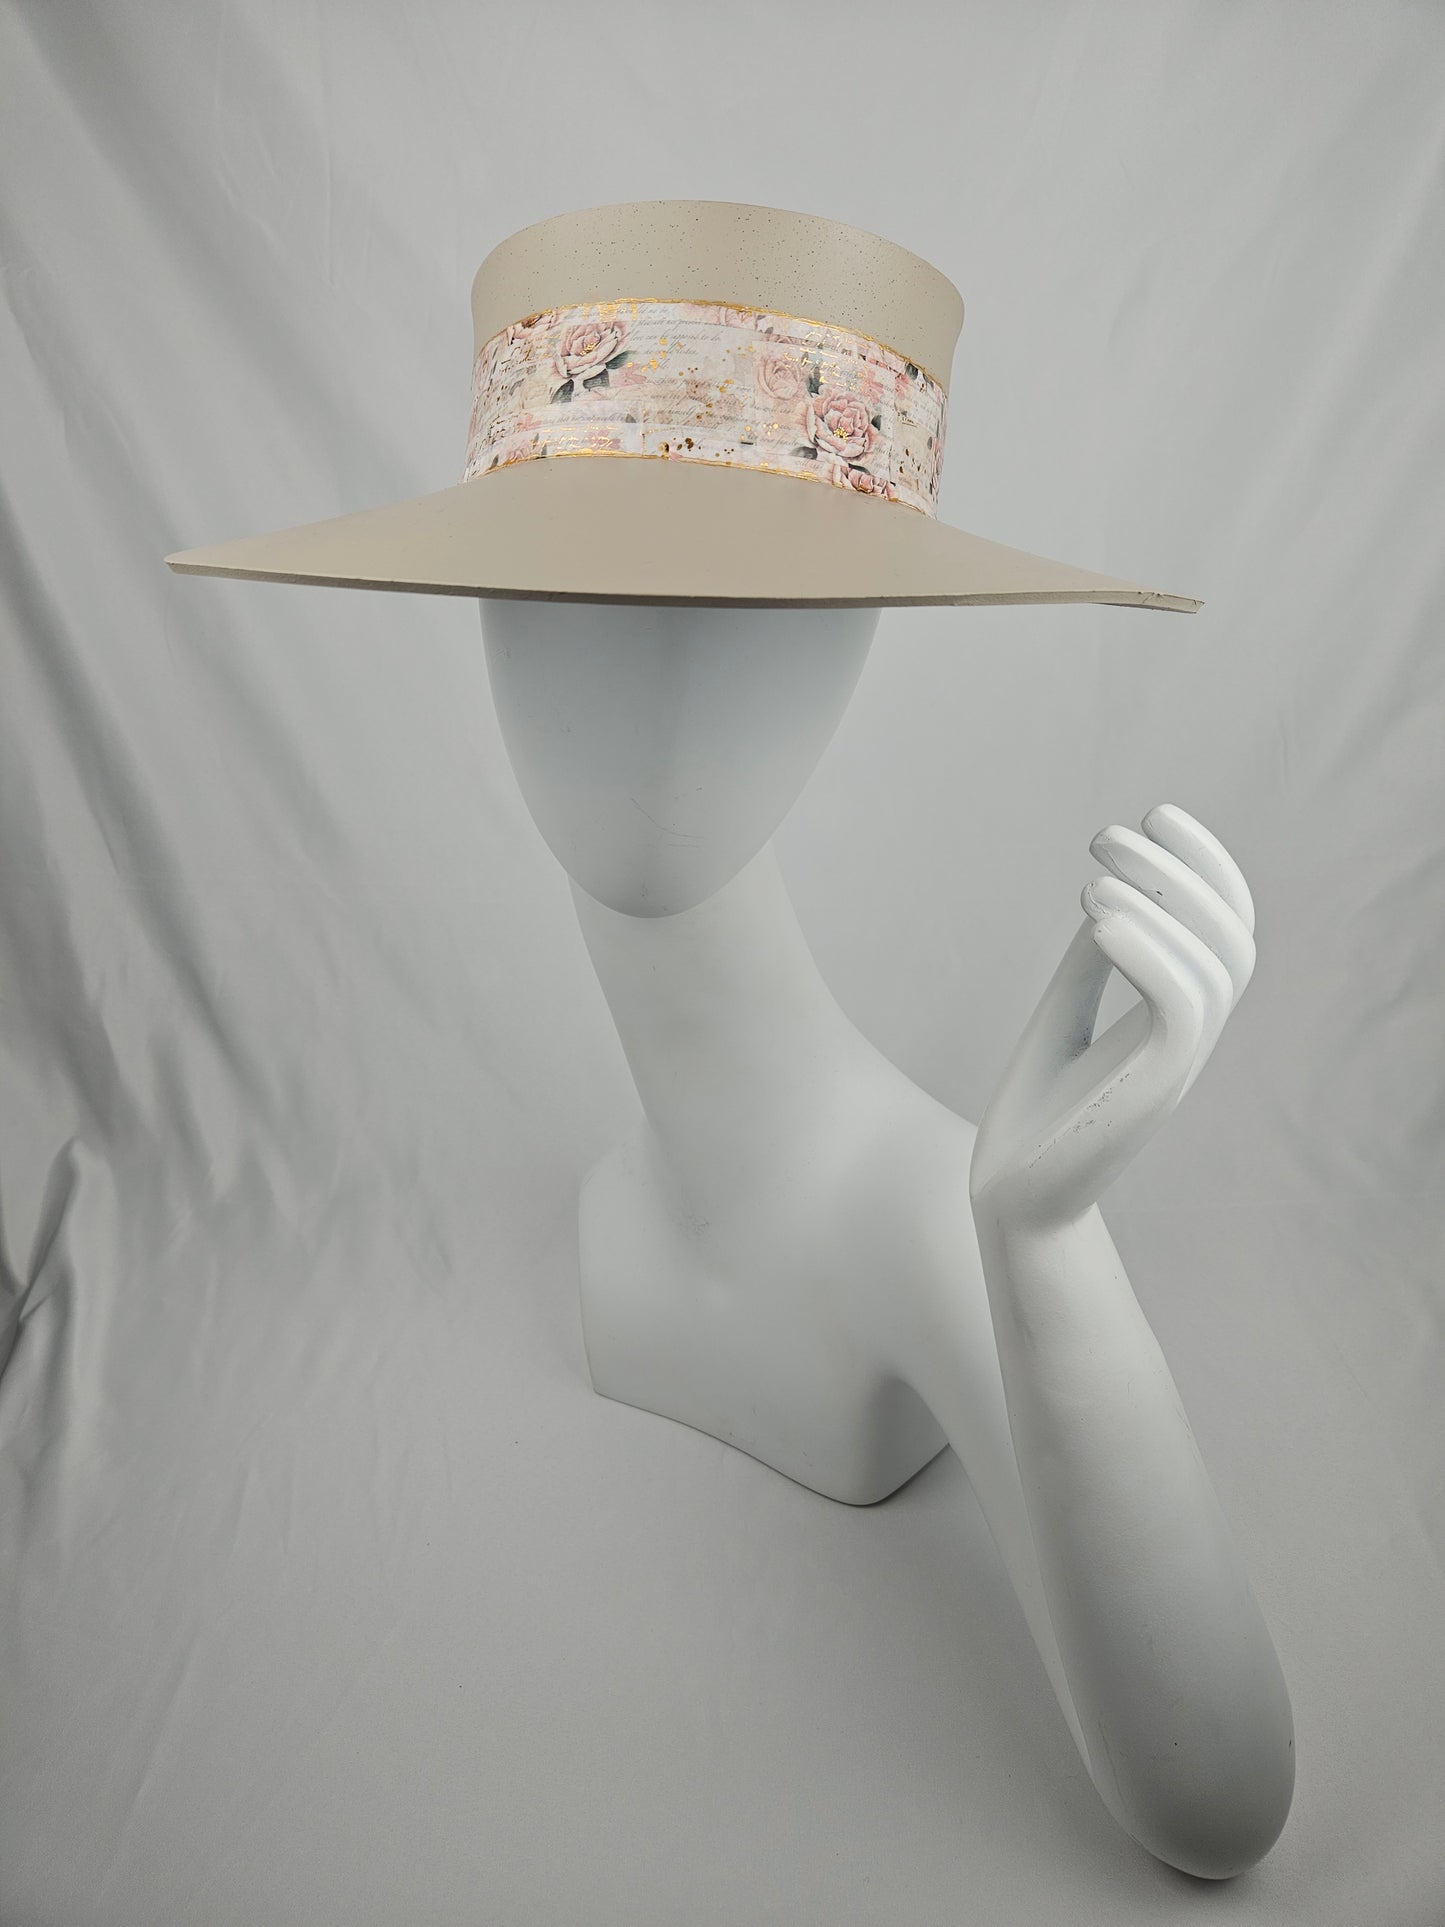 Tall Truly Taupe Audrey Foam Sun Visor Hat with Delicate Pink Floral  Band: Walks, Brunch, Tea, Garden, Golf, Easter, Church, No Headache